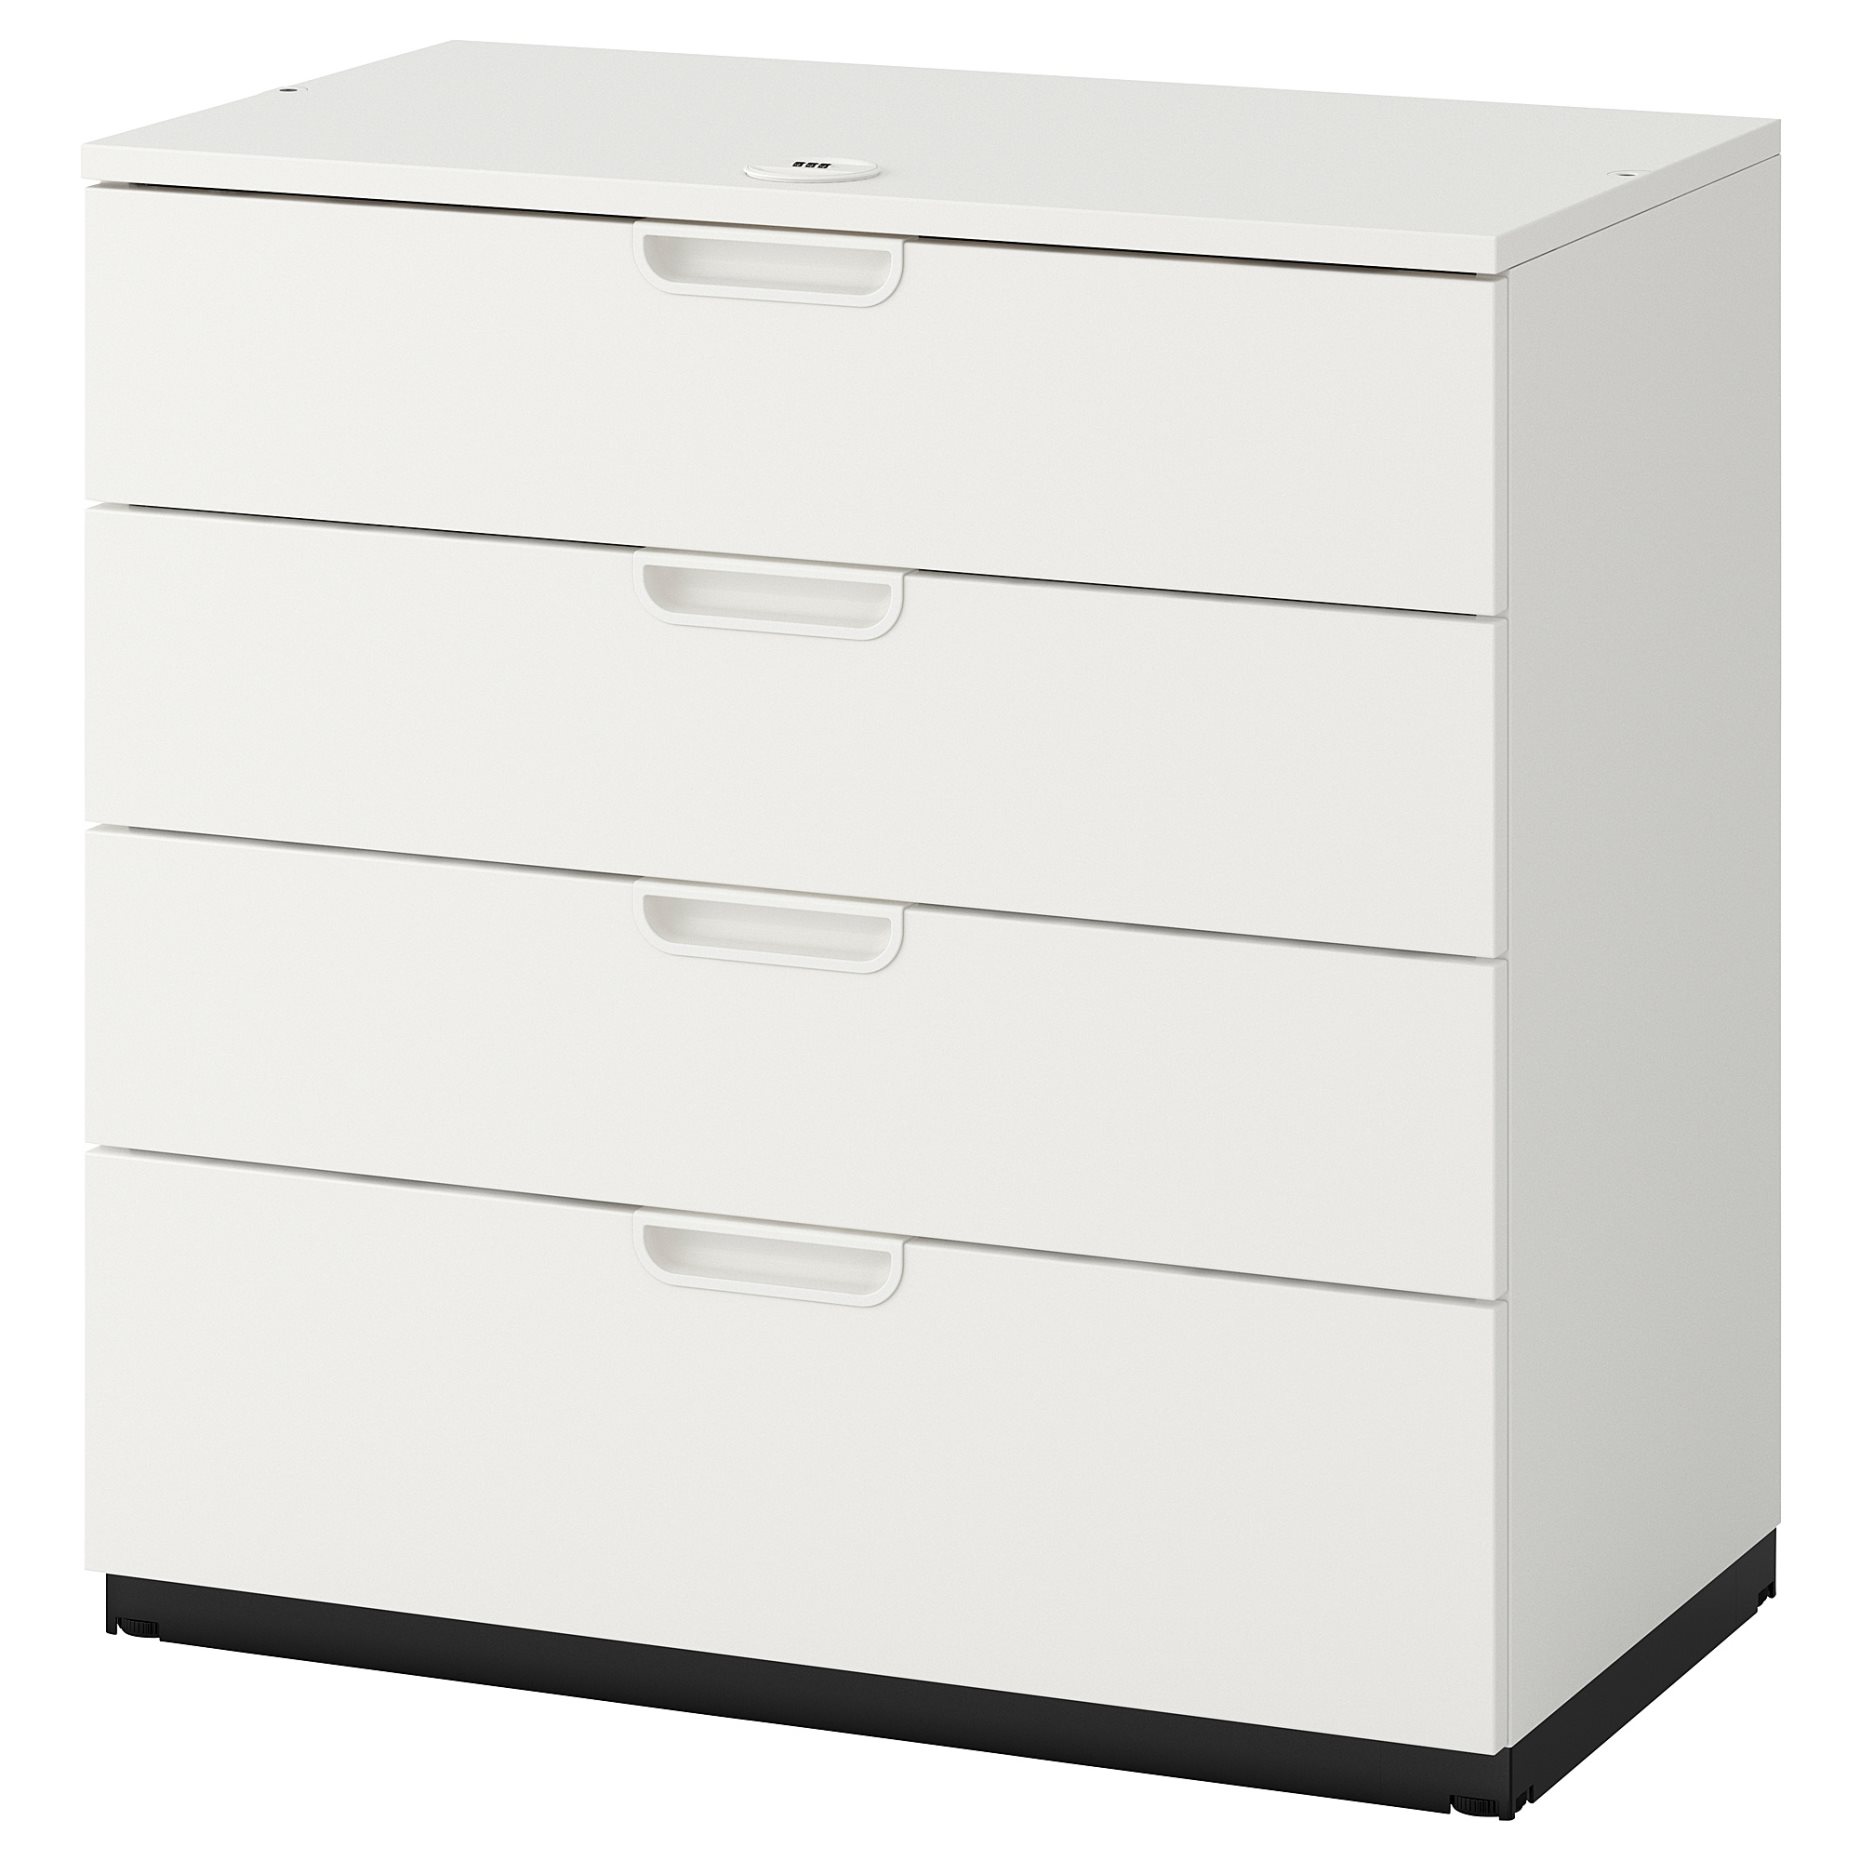 GALANT, drawer unit, 903.651.61